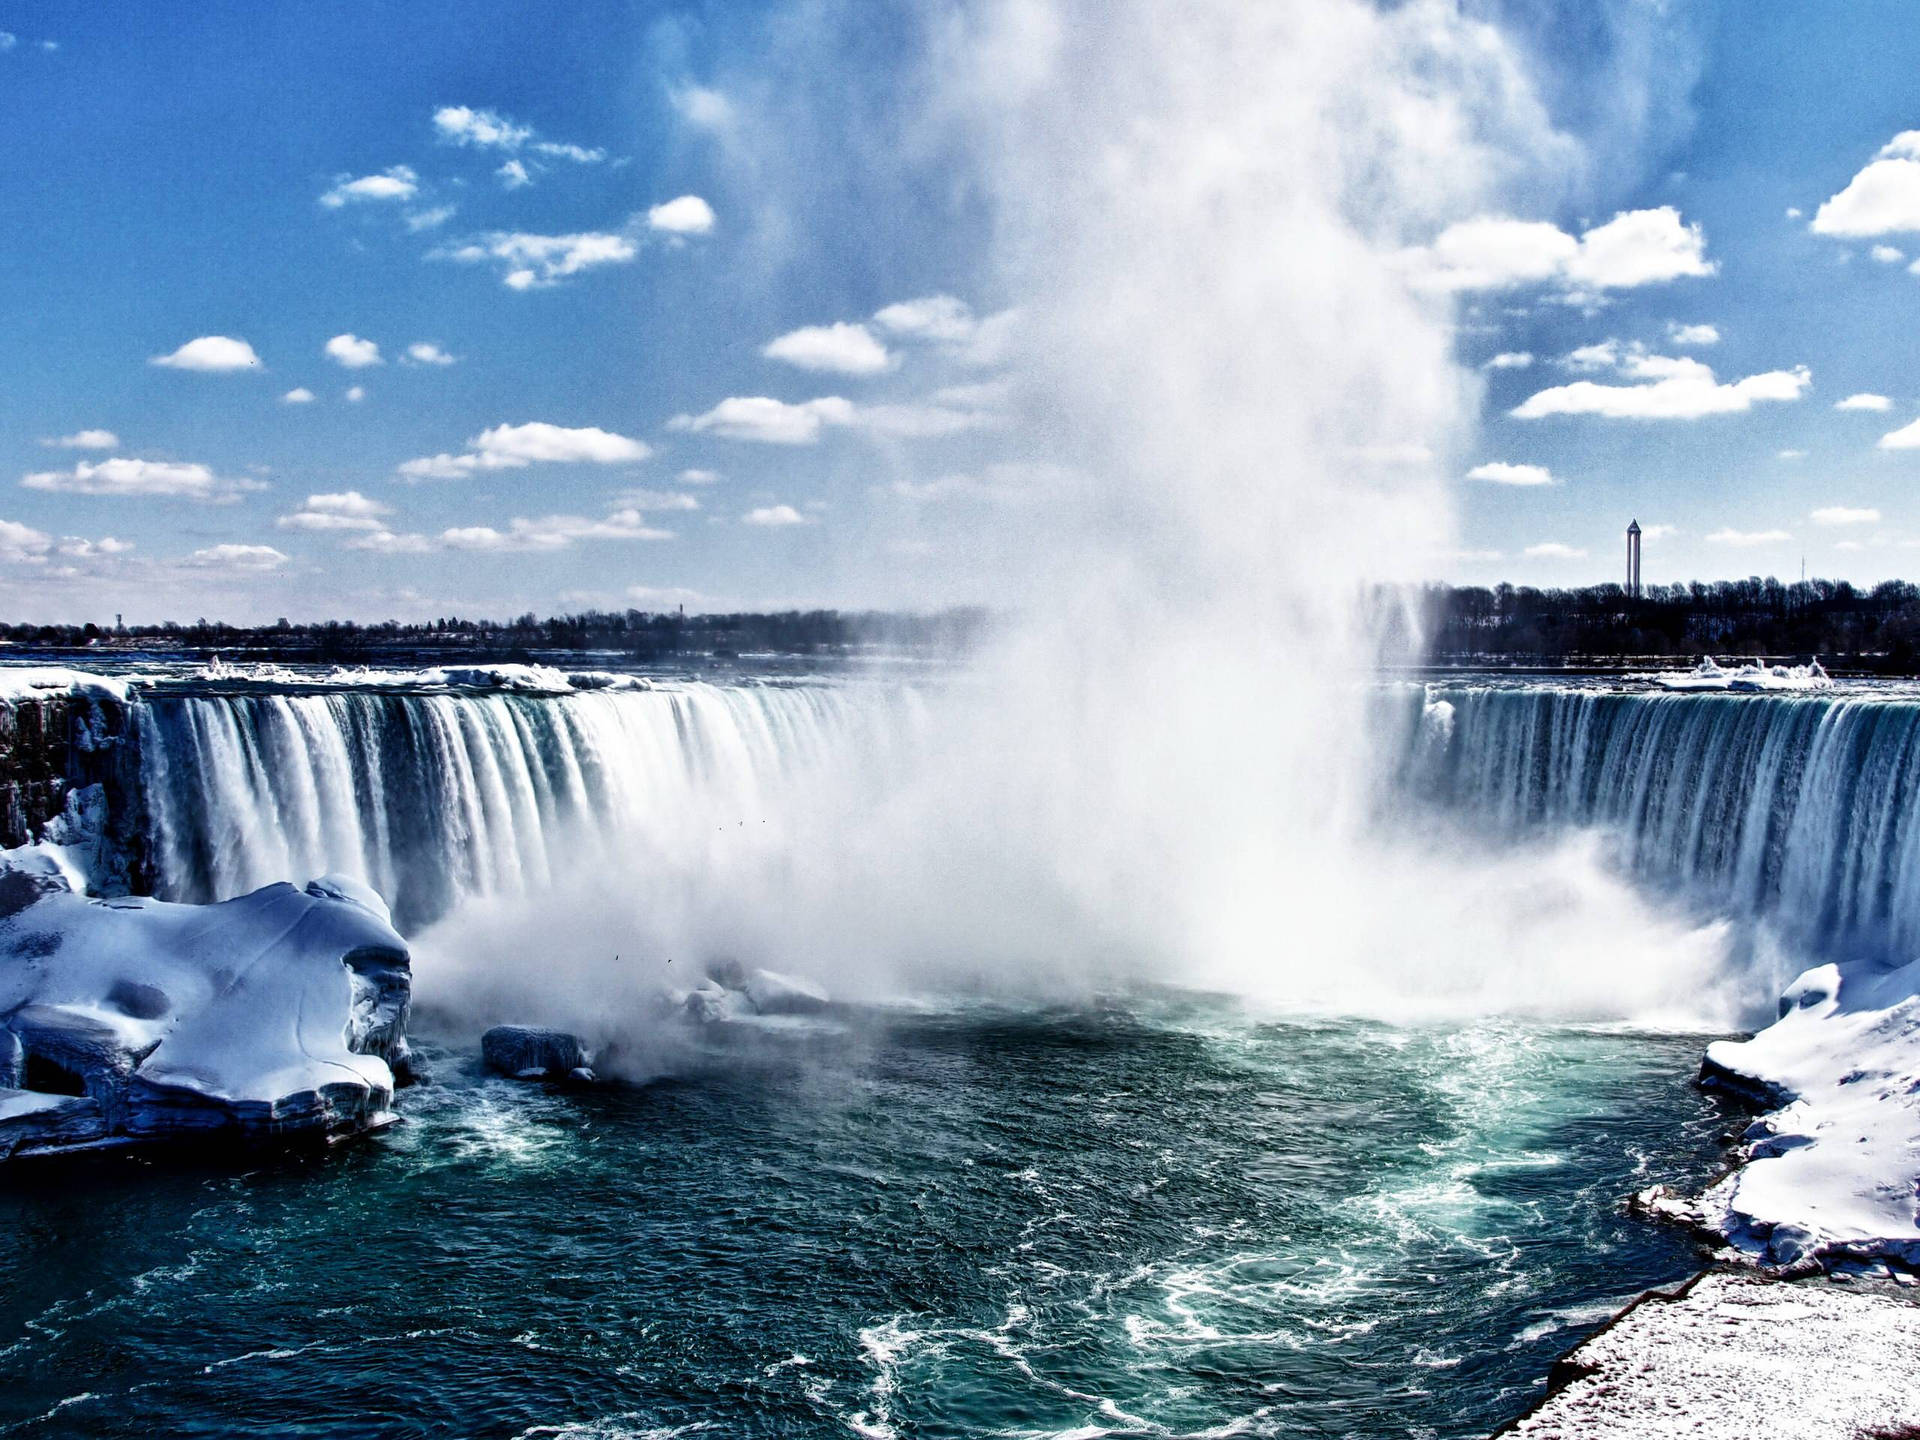 Niagara Falls 2560X1920 Wallpaper and Background Image